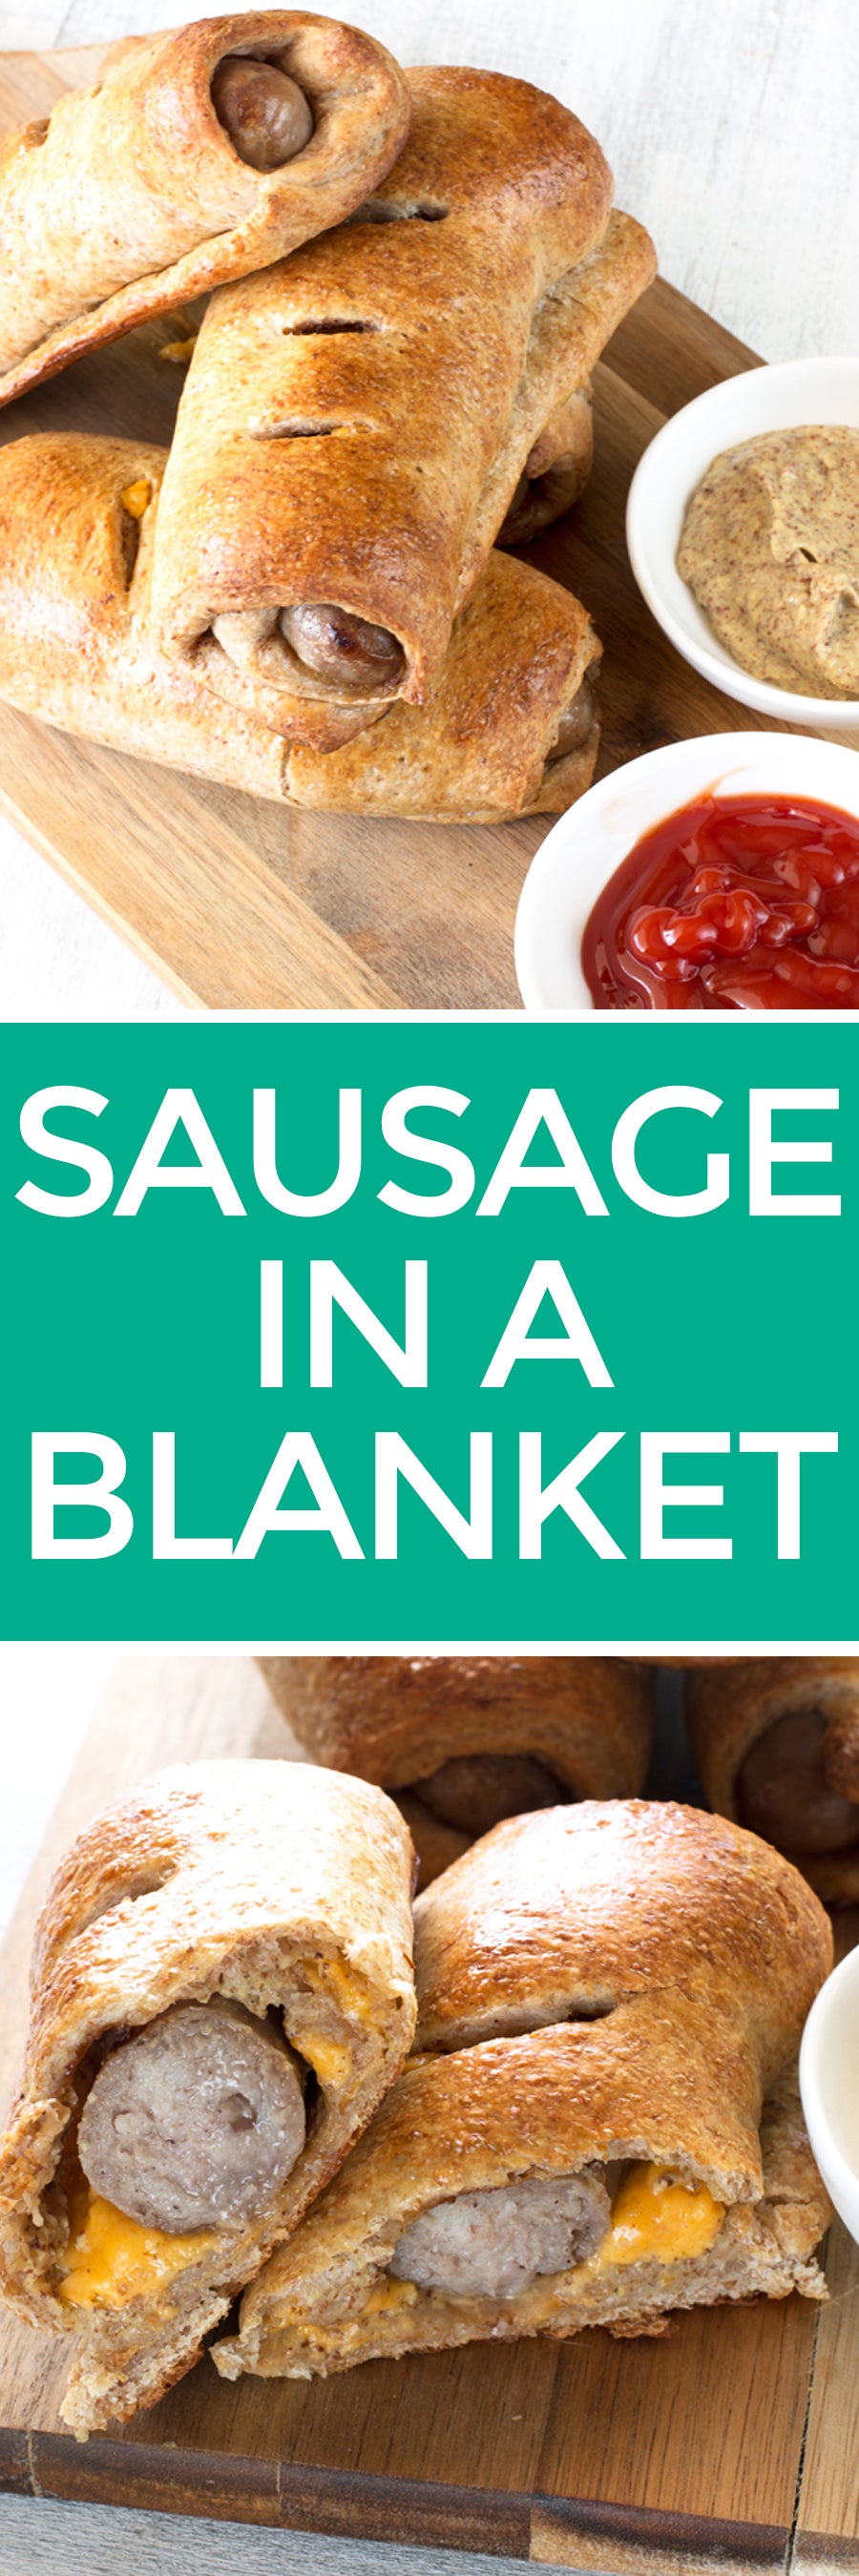 Sausage in a Blanket | pigofthemonth.com